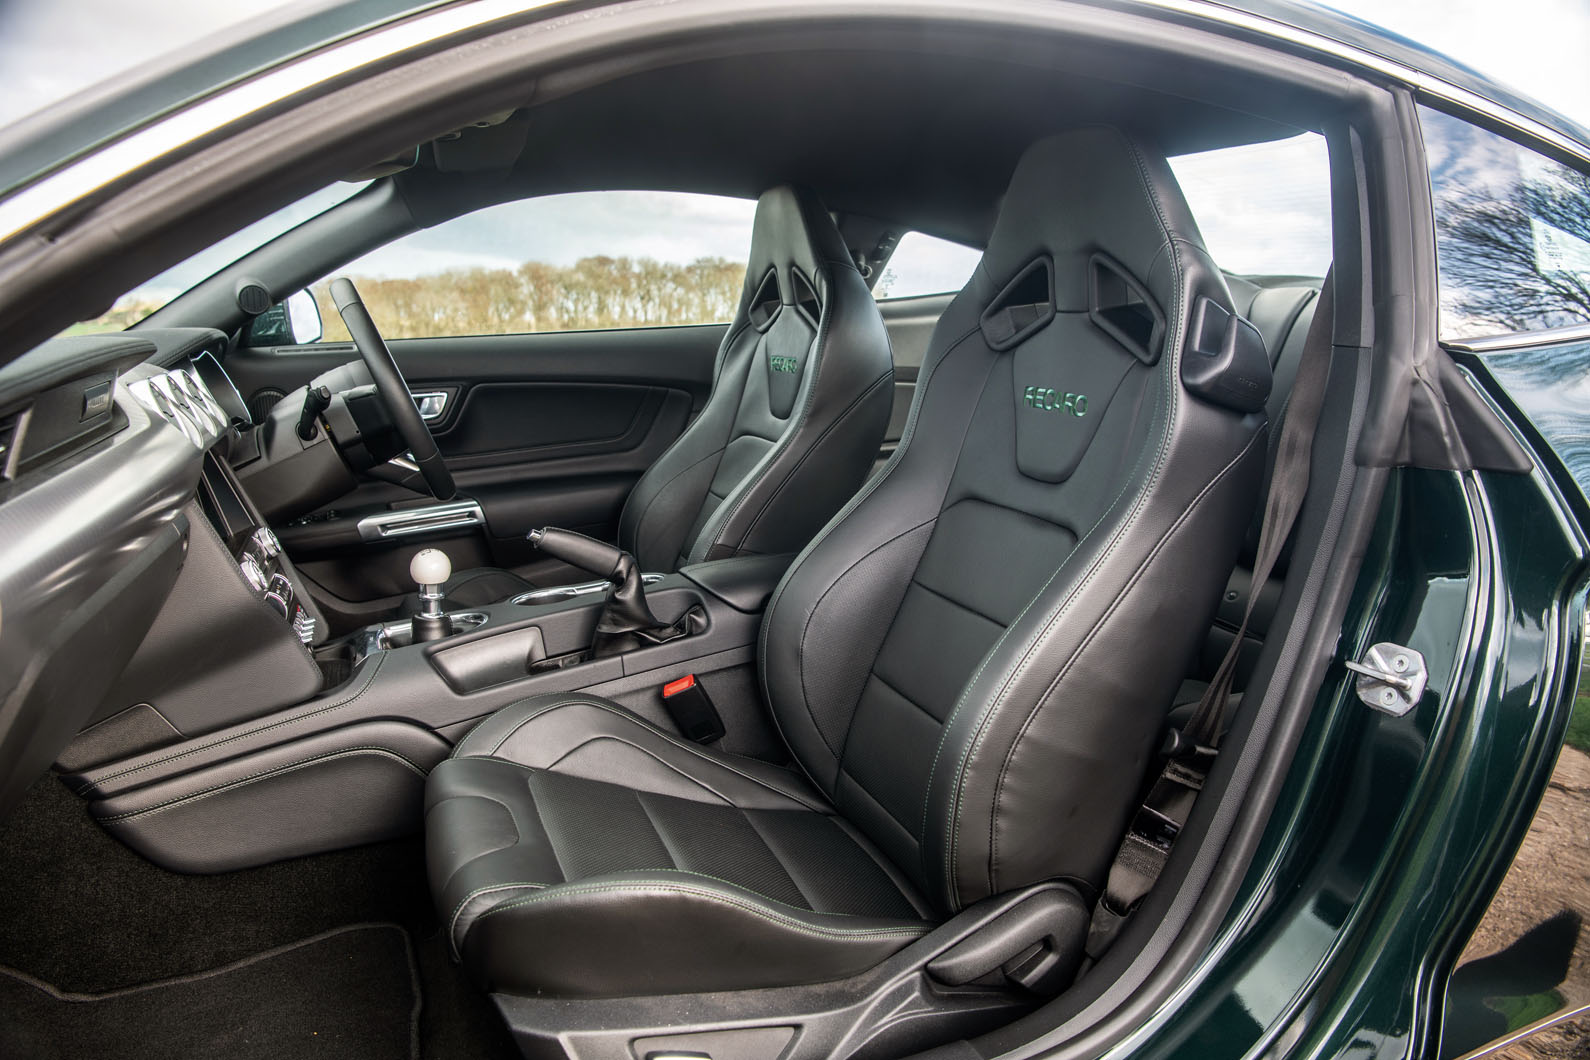 Ford Mustang Bullitt 2018 road test review - cabin